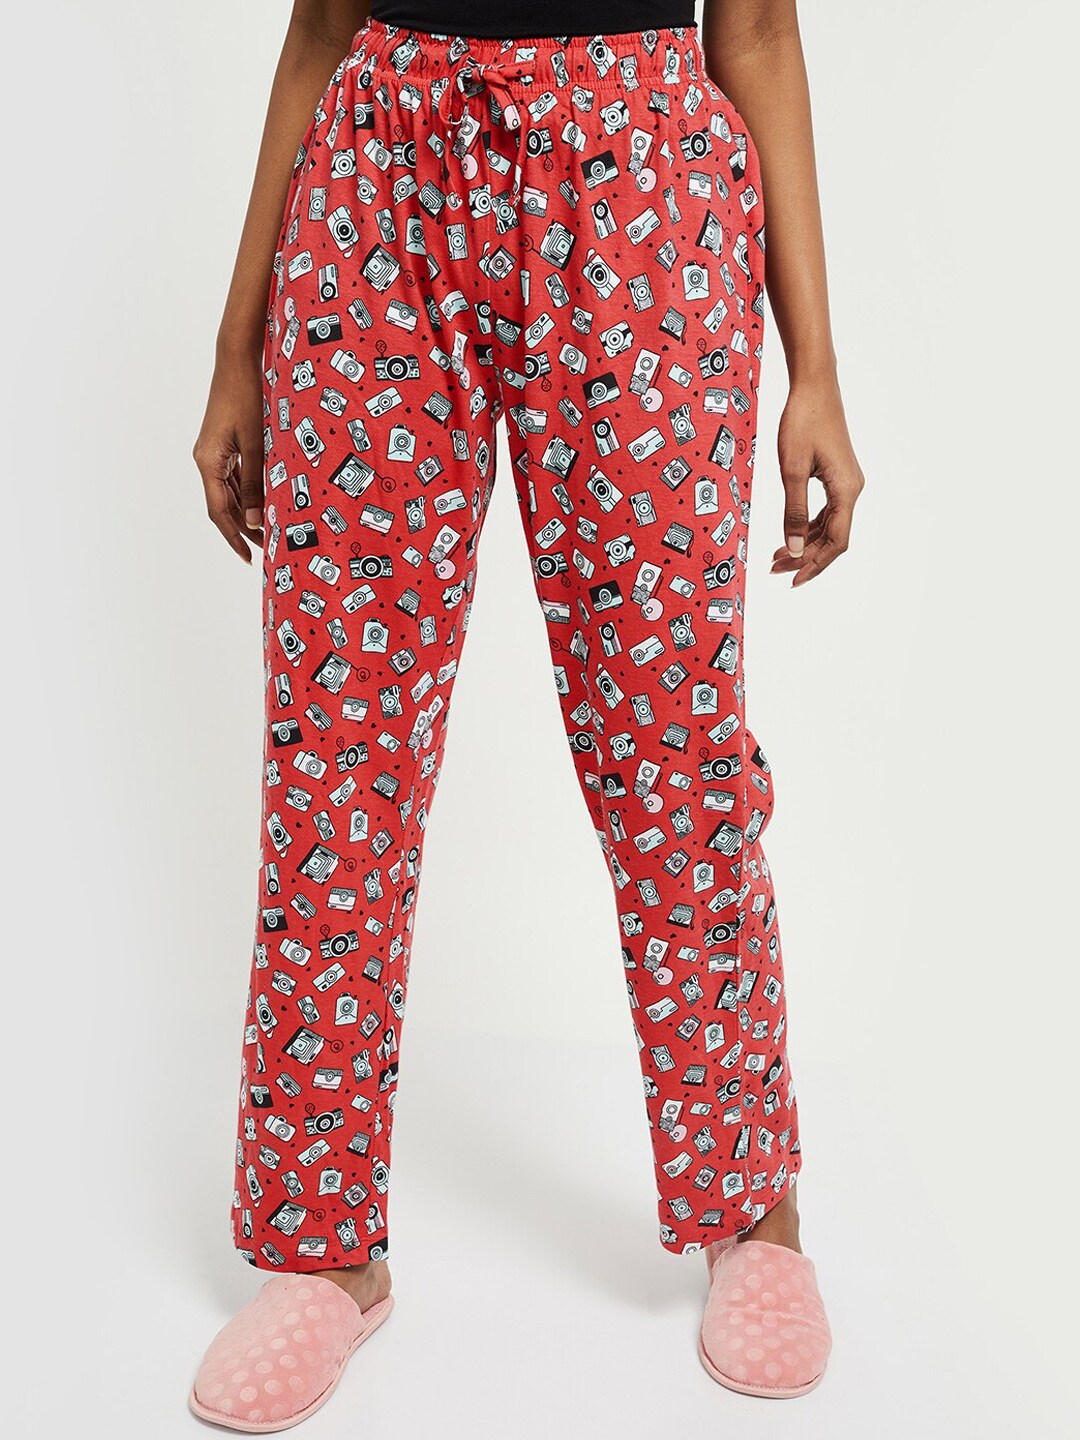 max Women Red Printed Pyjamas Price in India